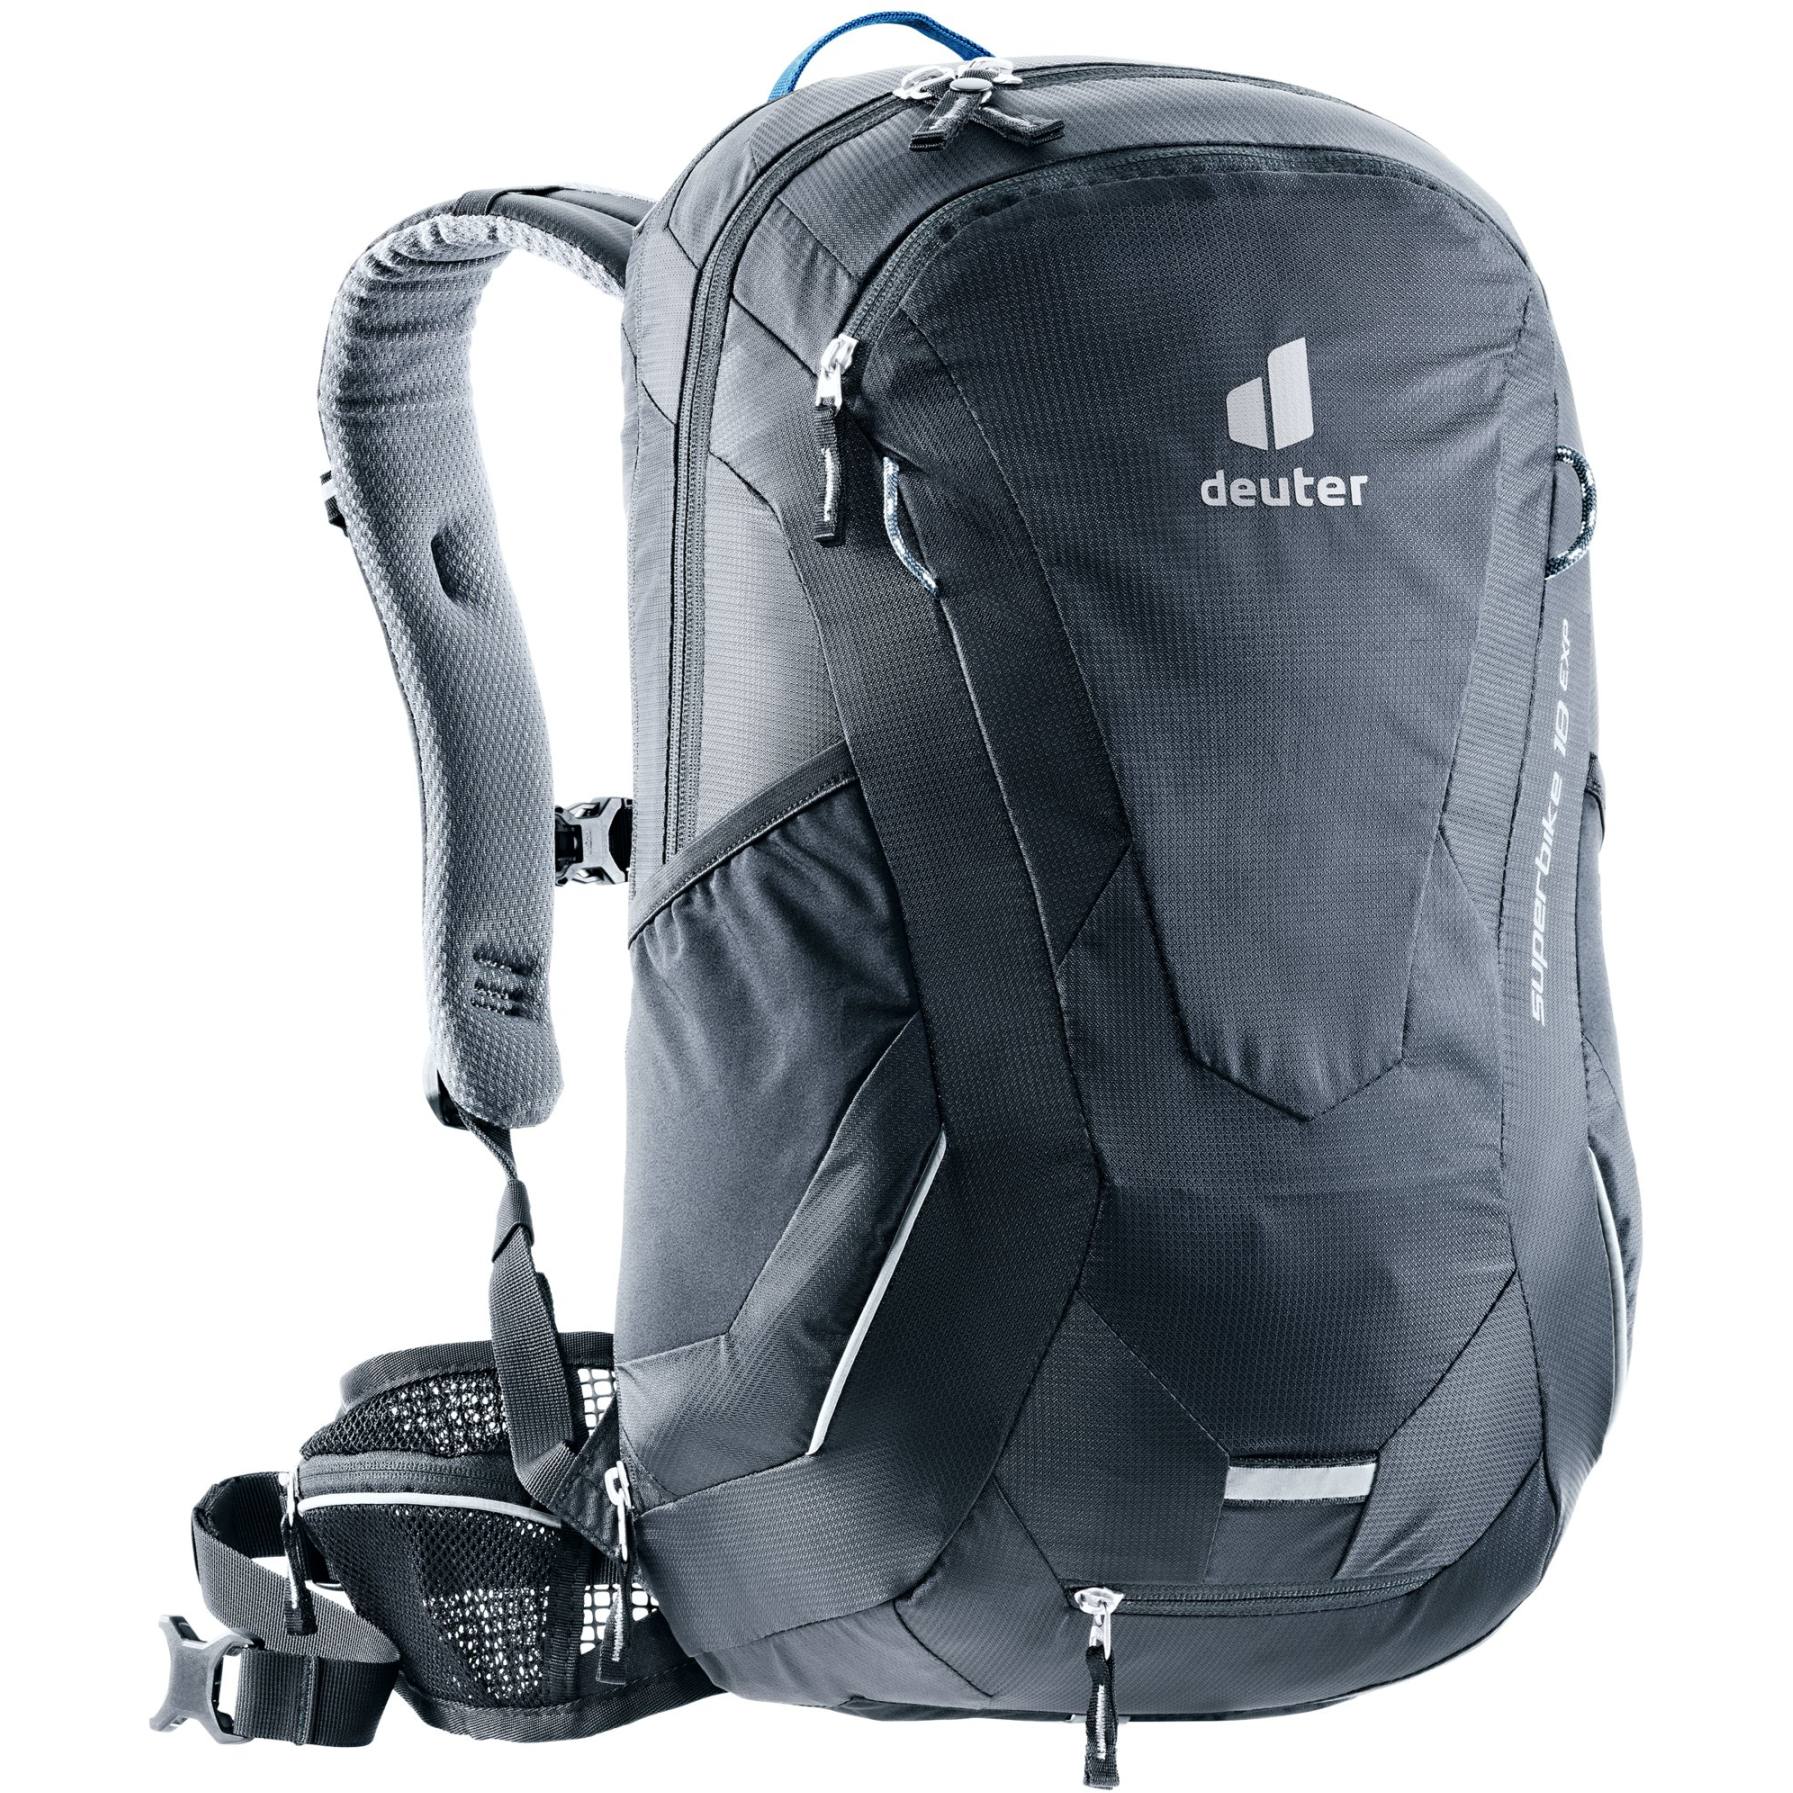 Productfoto van Deuter Superbike 18 EXP Backpack - black